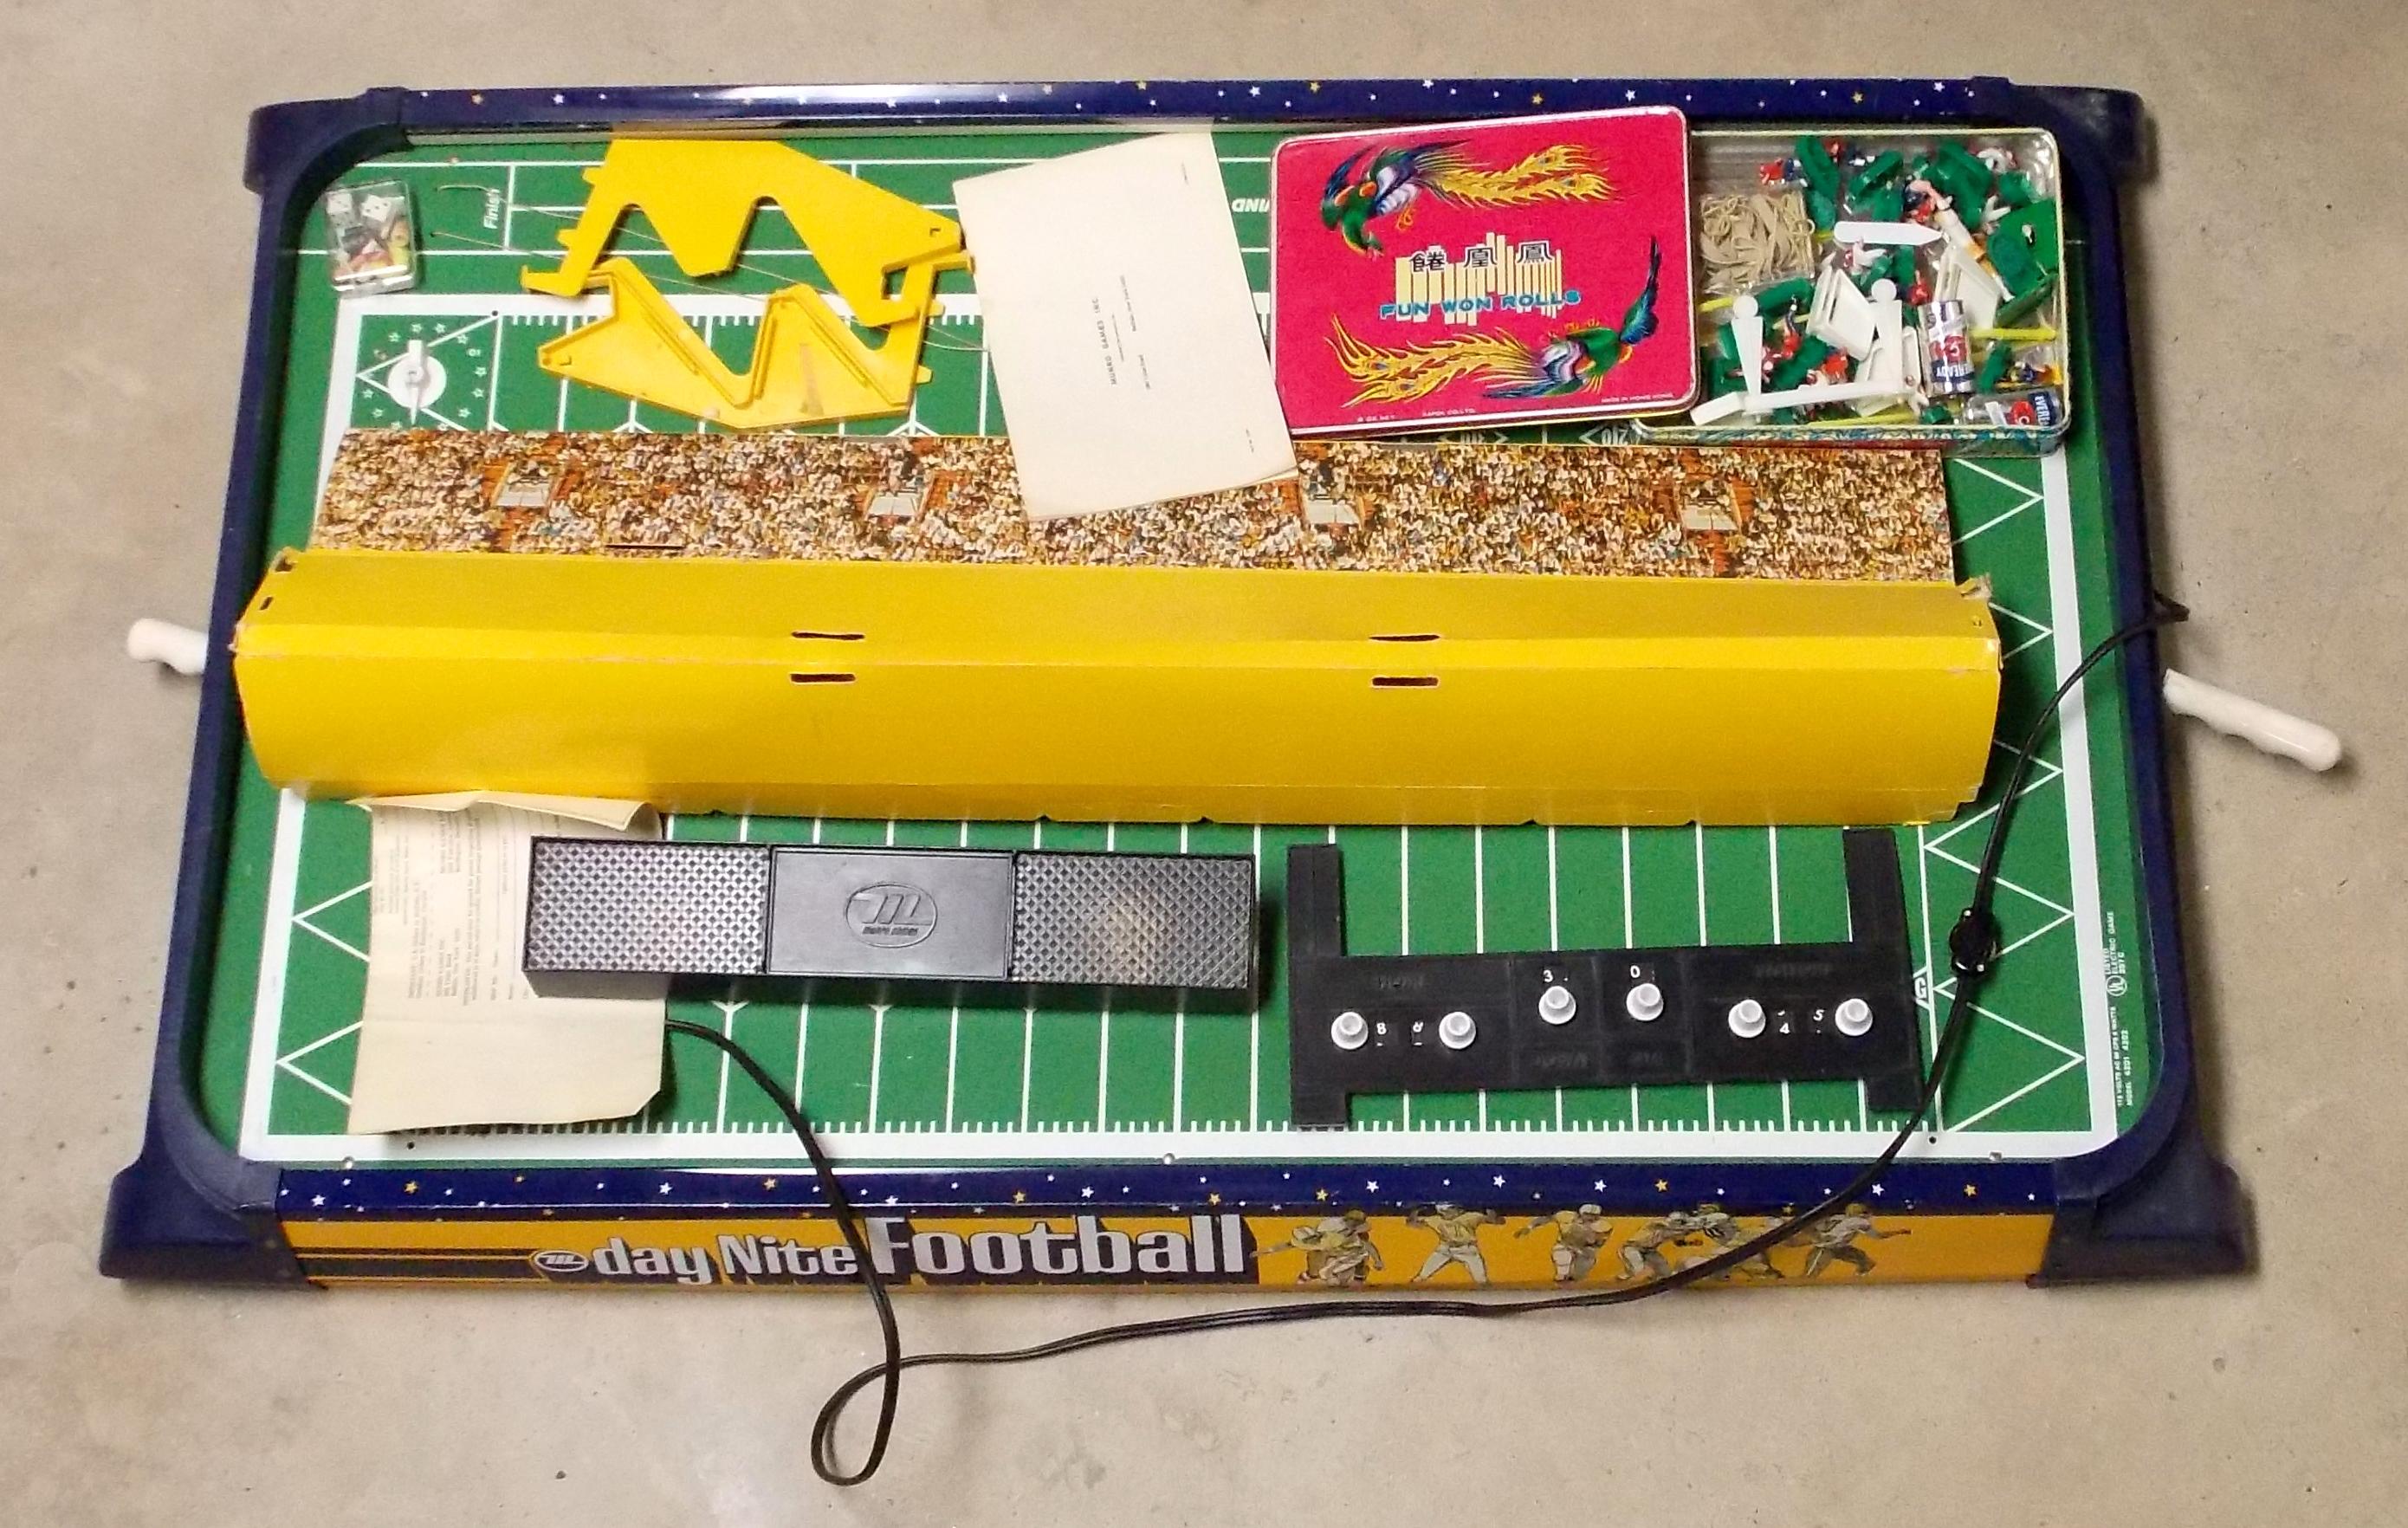 Munro Day/Nite Electronic Football Game in Original Box